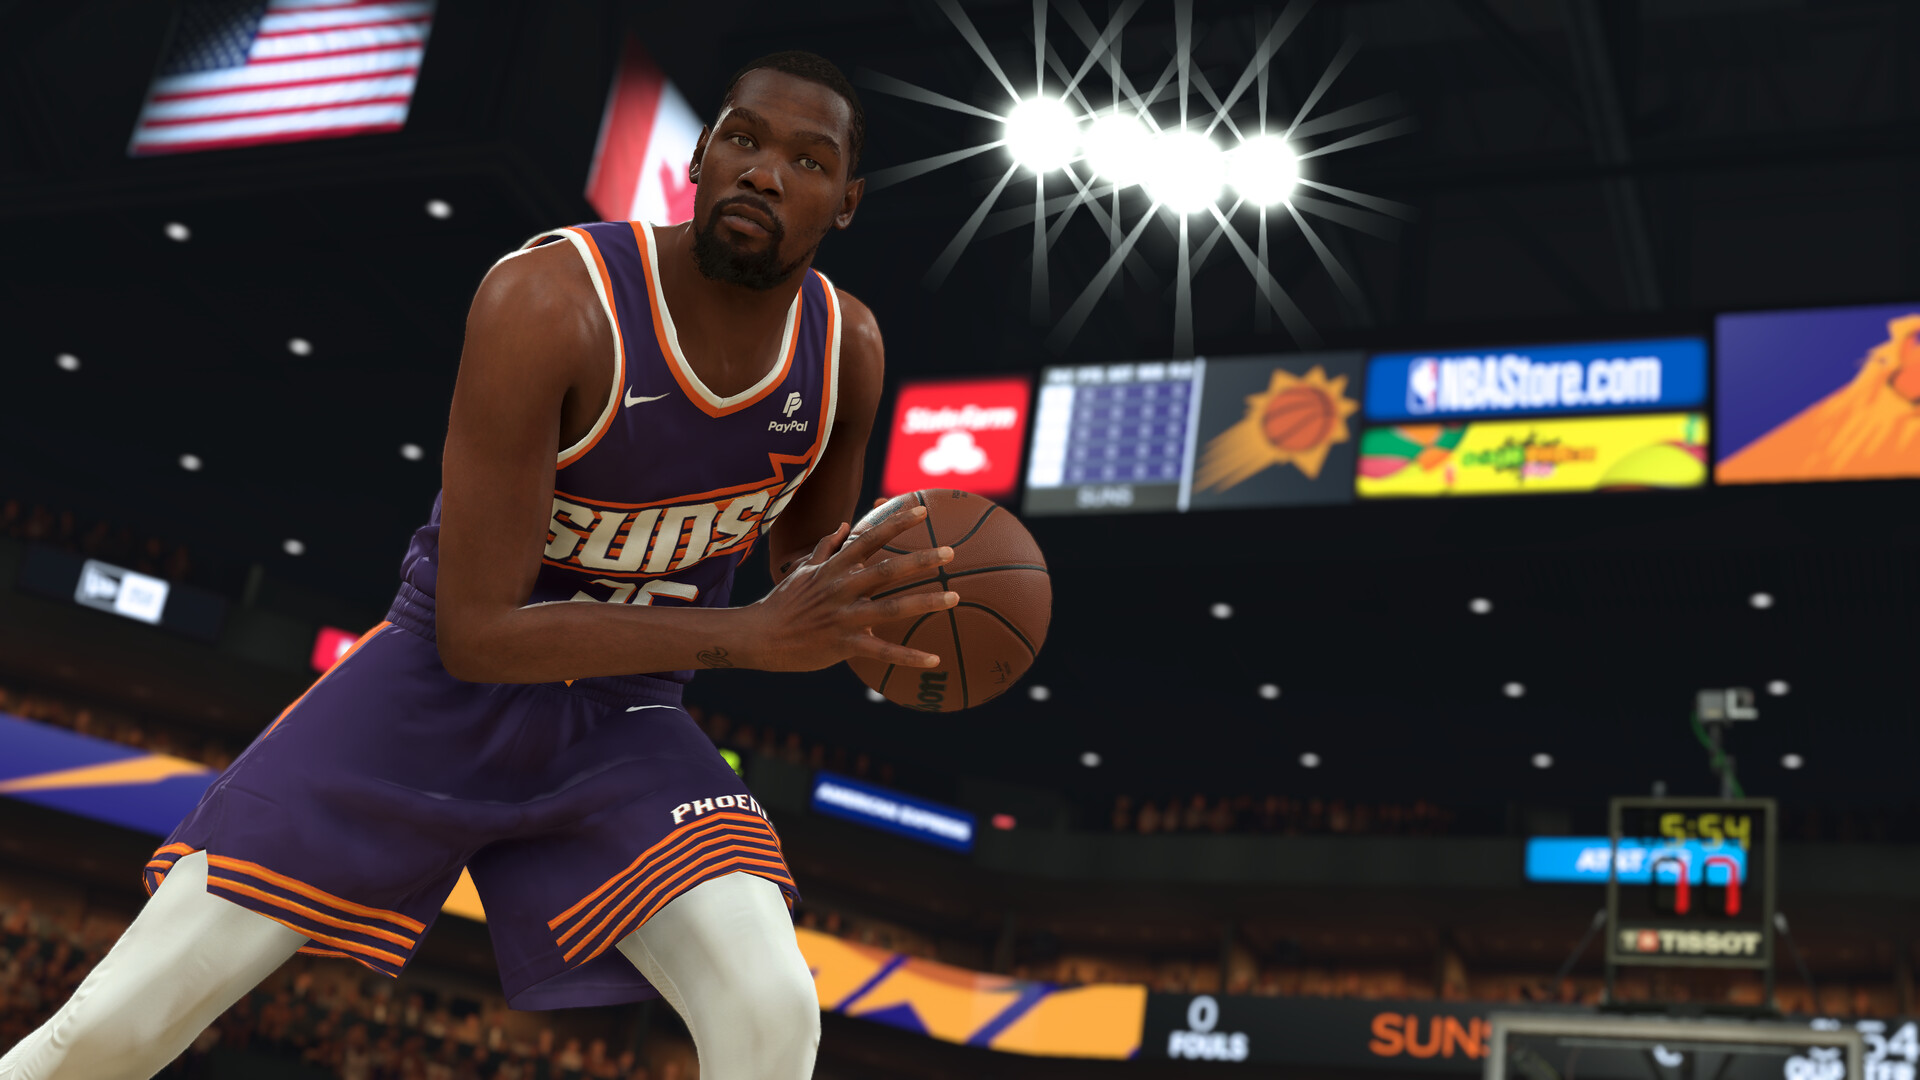 Comprar NBA 2K24 Kobe Bryant Edition Steam